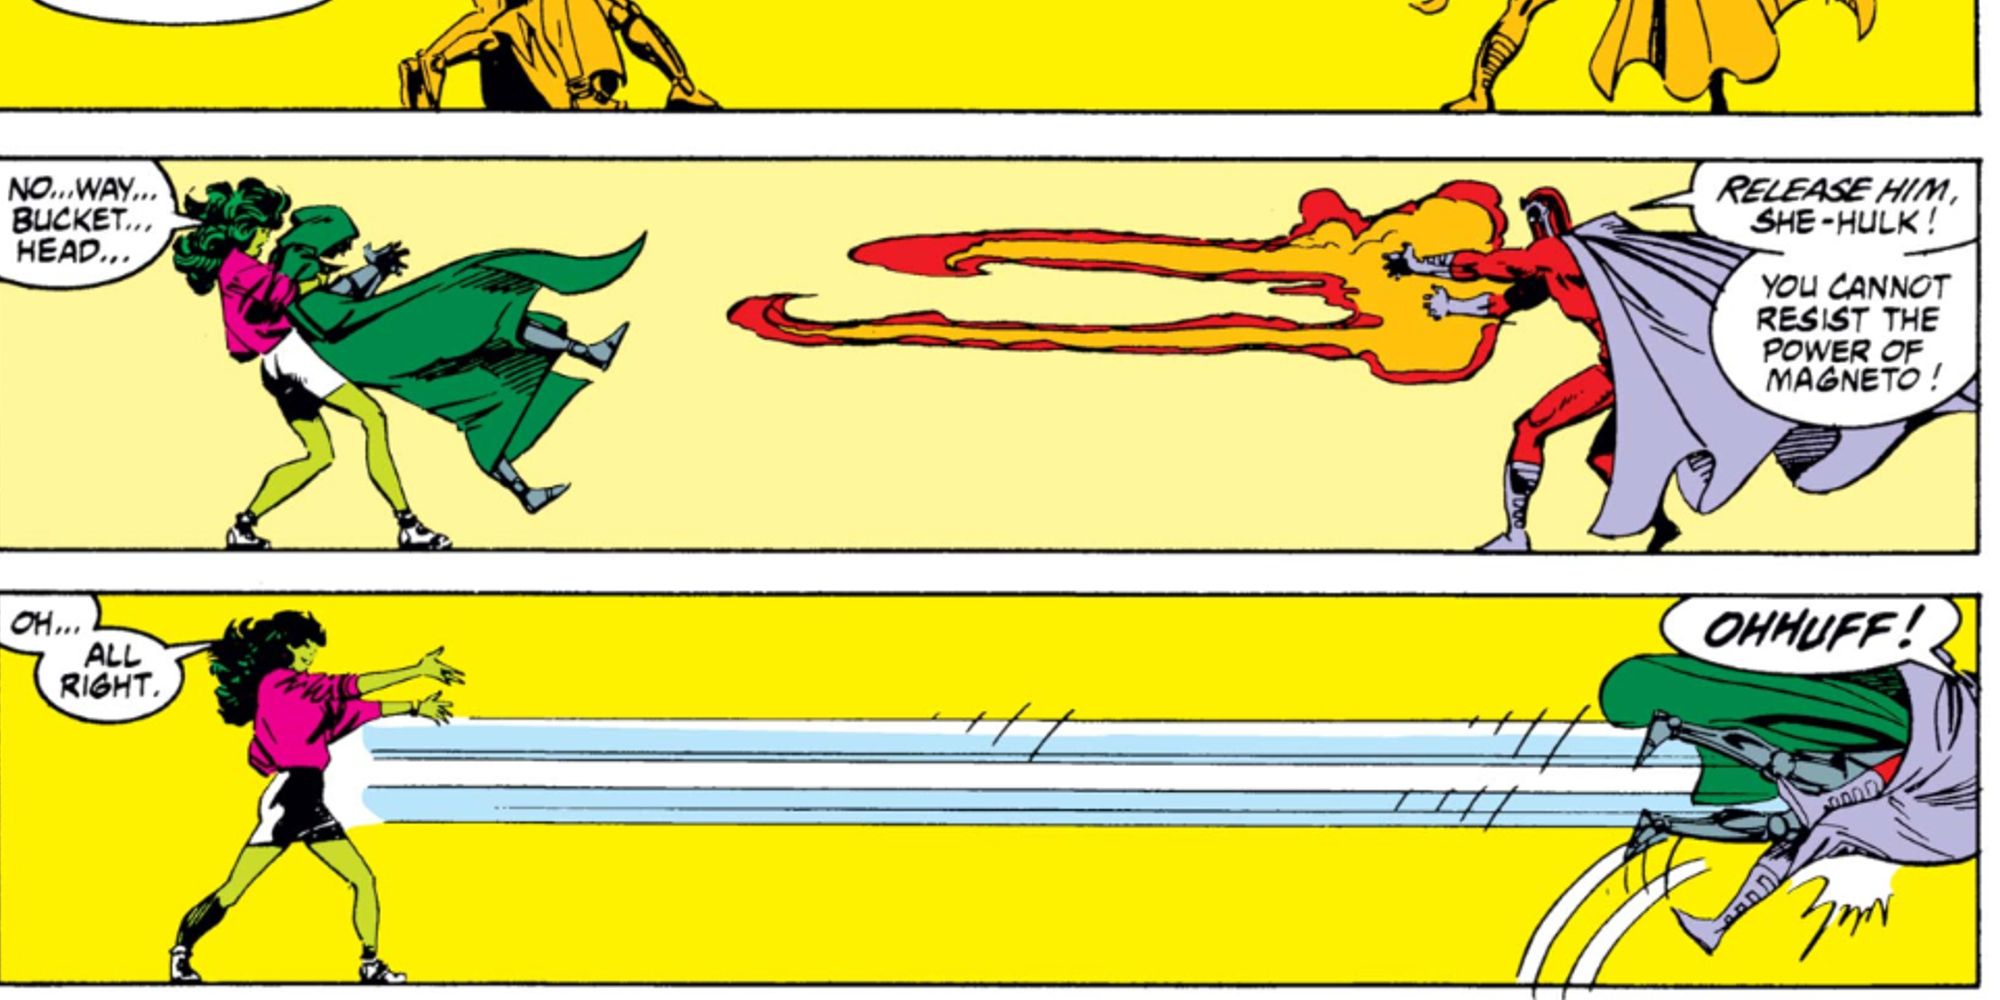 She-Hulk derrotando Magneto com um Doombot em Marvel Comics Presents #18